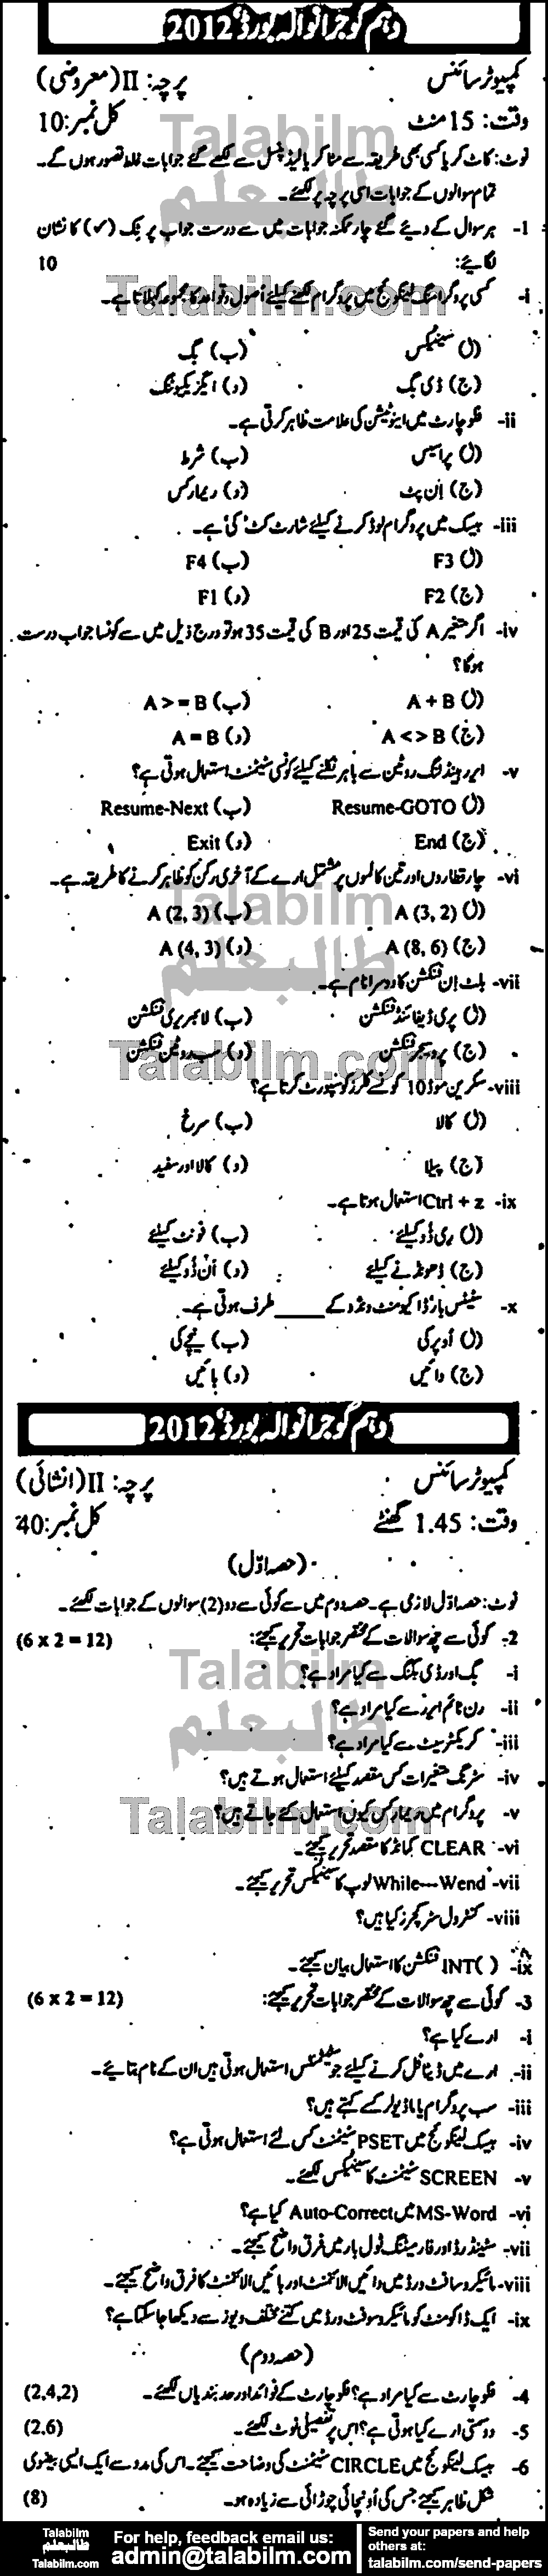 Computer Science 0 past paper for Urdu Medium 2012 Group-I